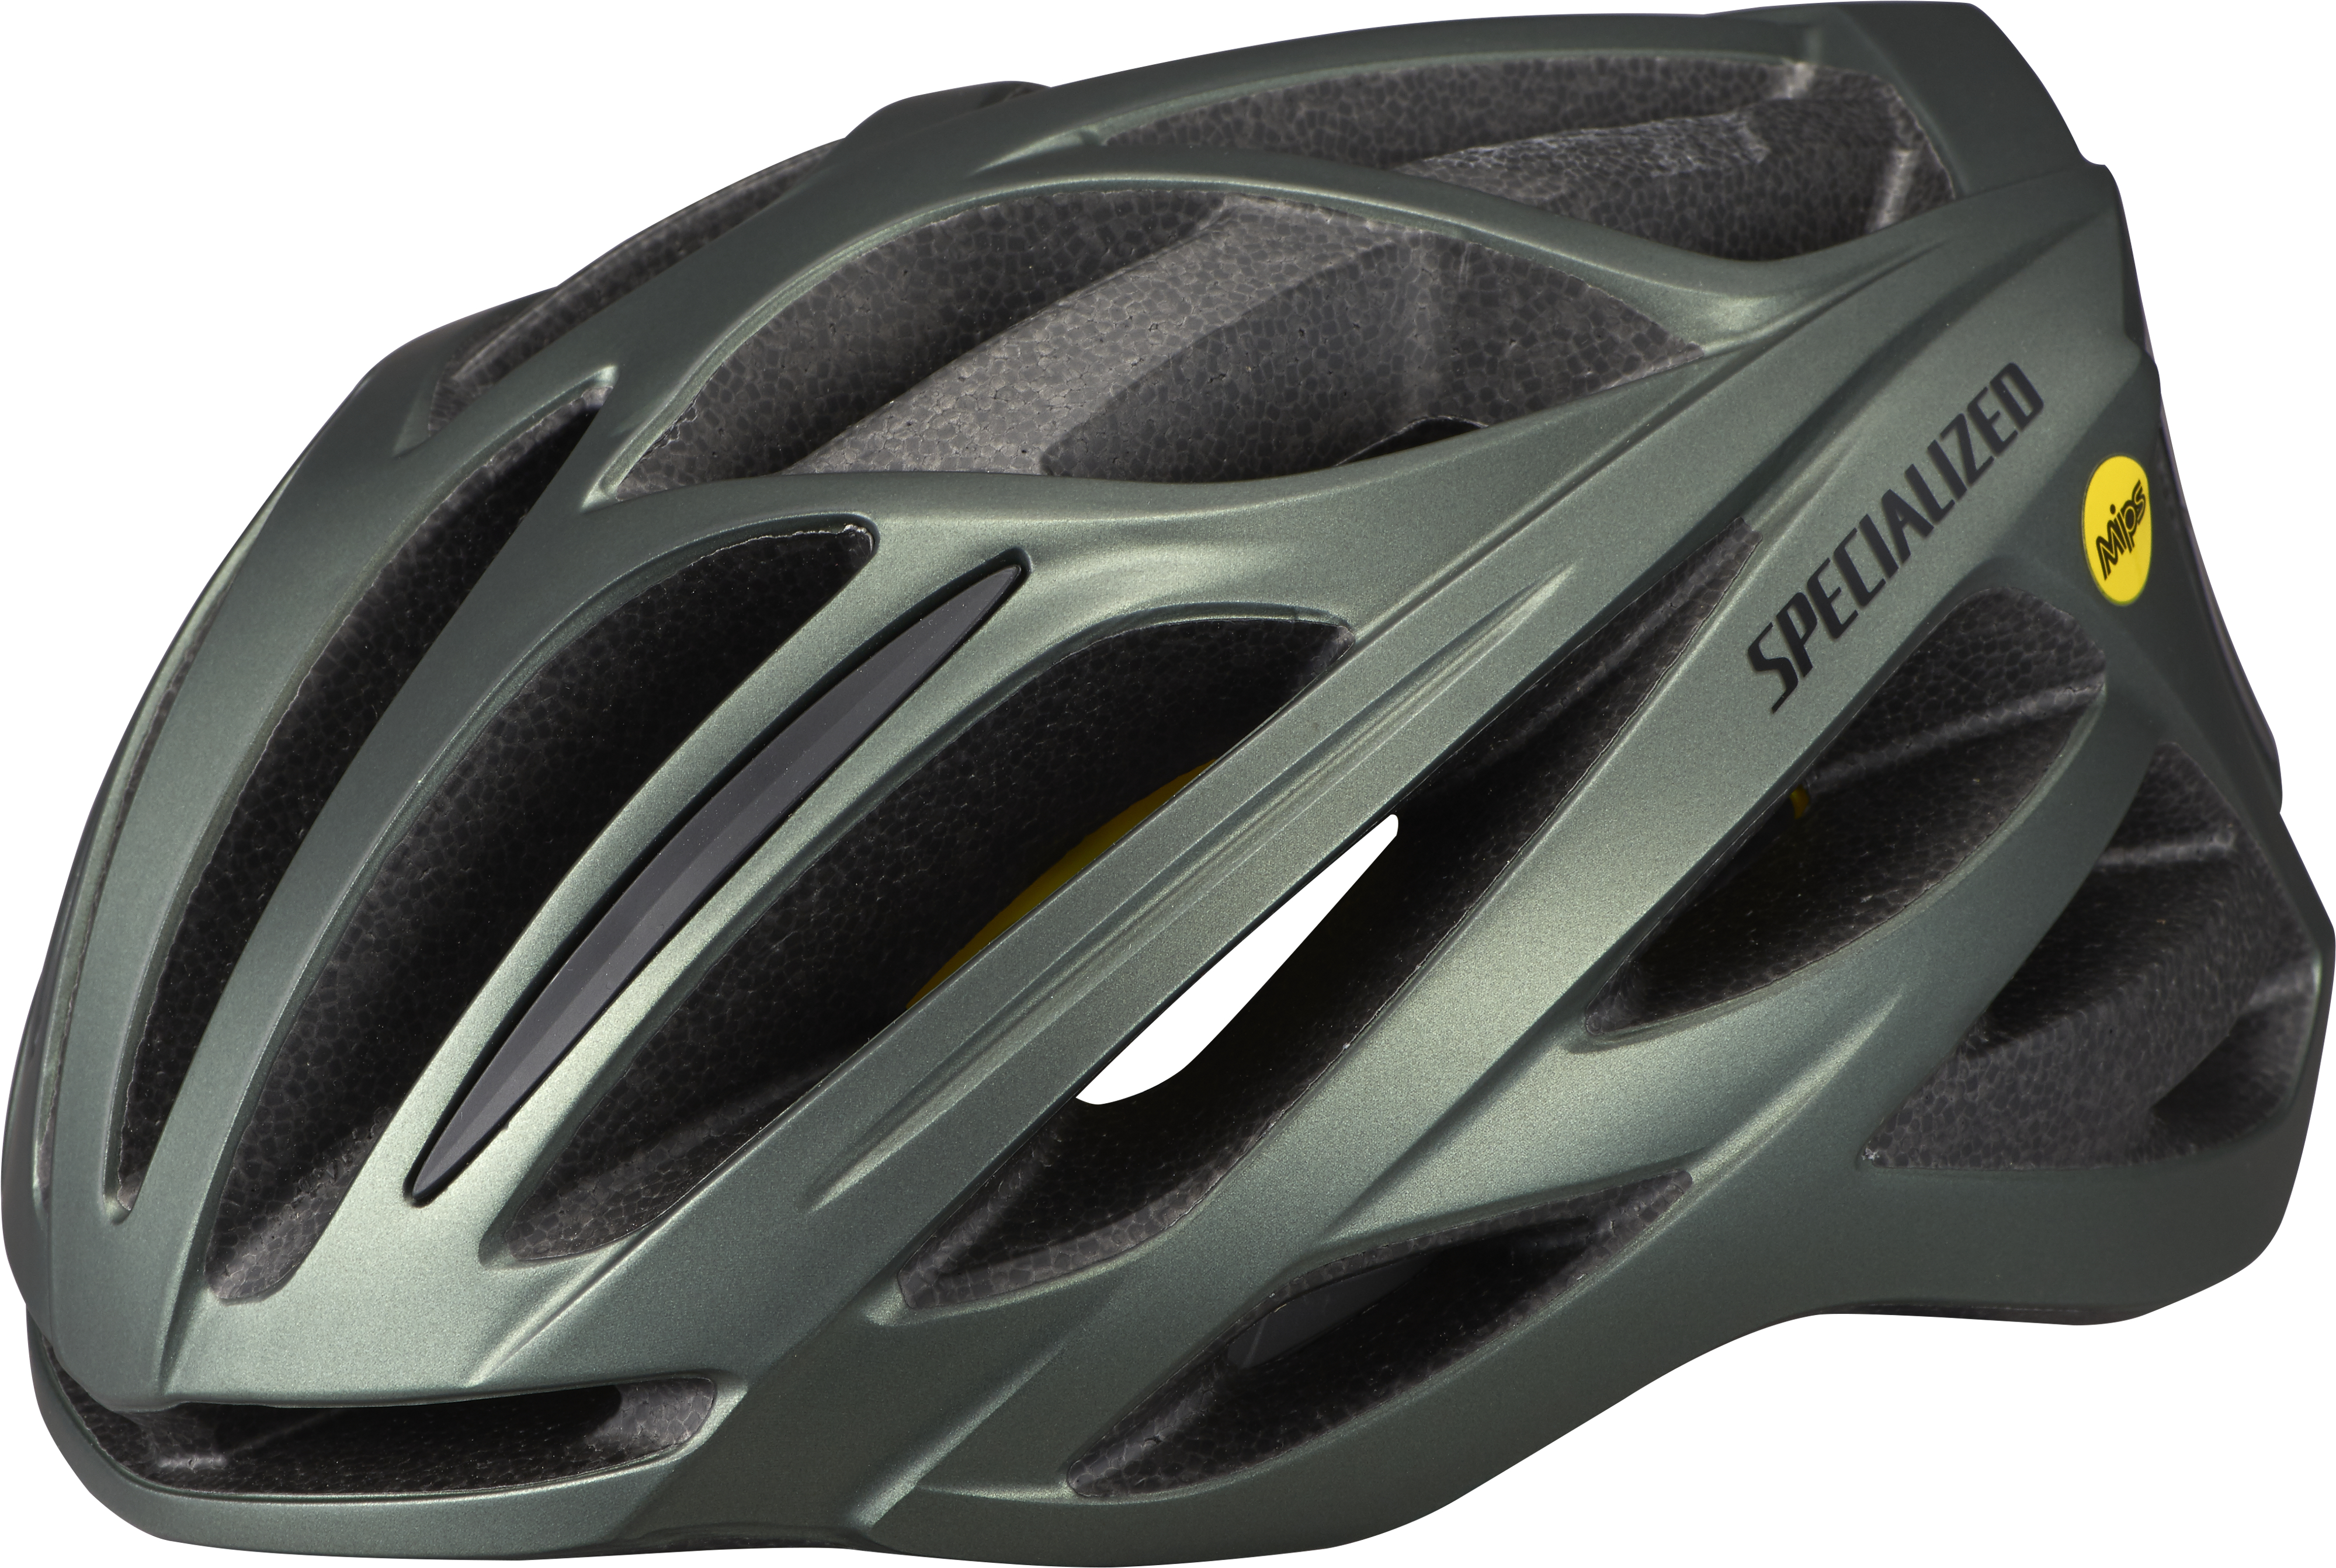 Cycles UK Specialized  Echelon II MIPS Road Cycling Helmet S Oak Green Metallic/Black Reflective